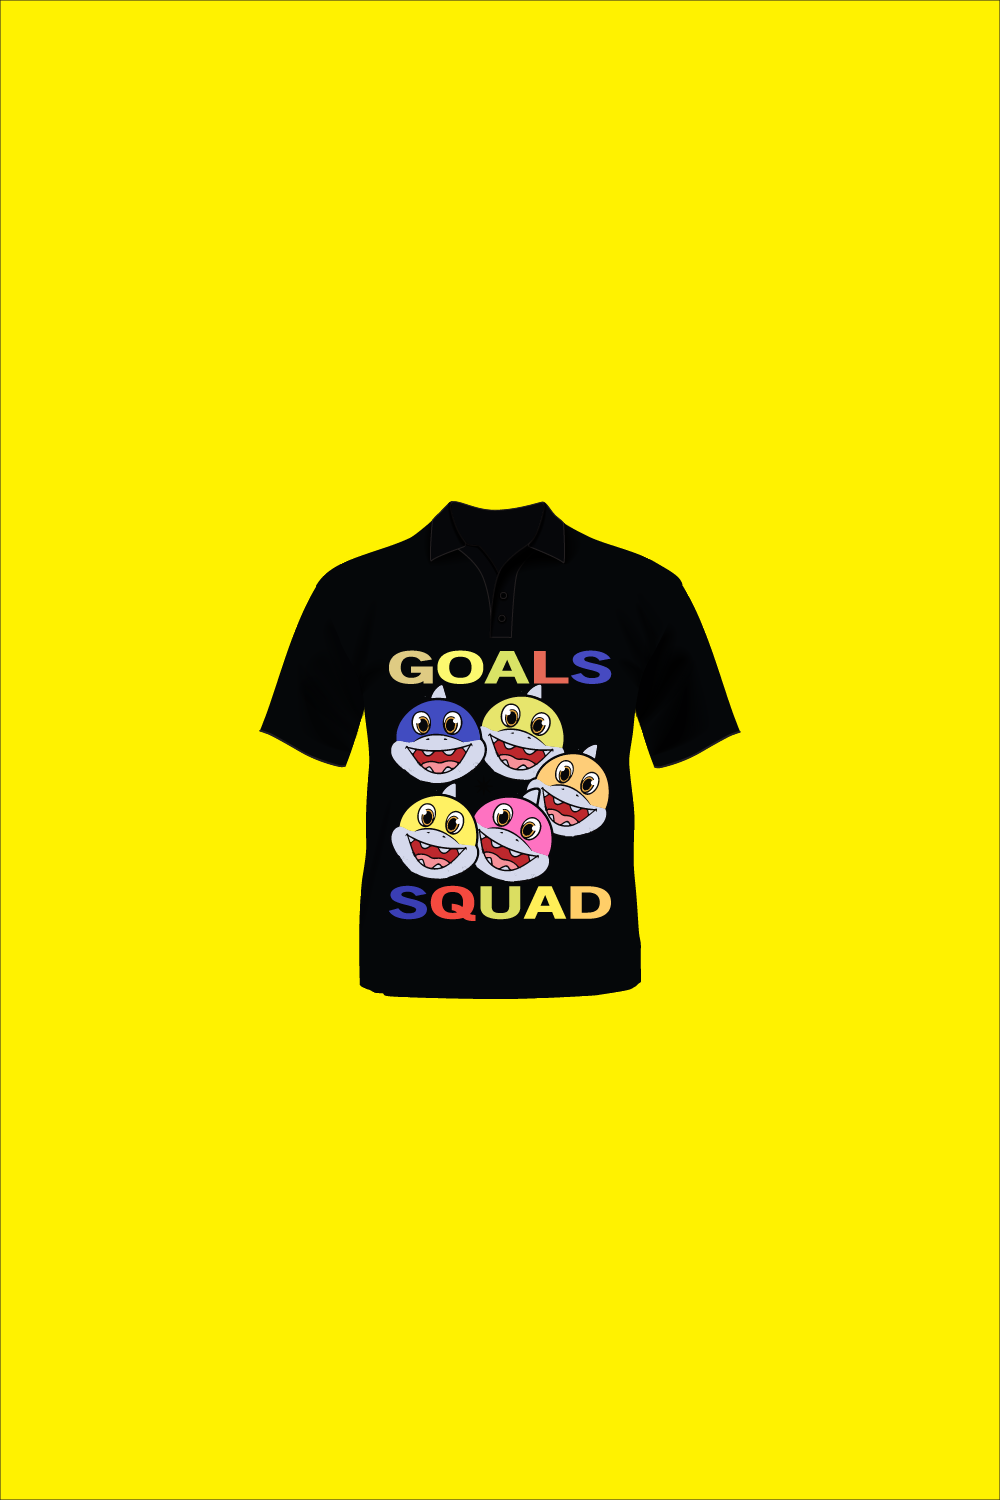 squad goals pinterest preview image.